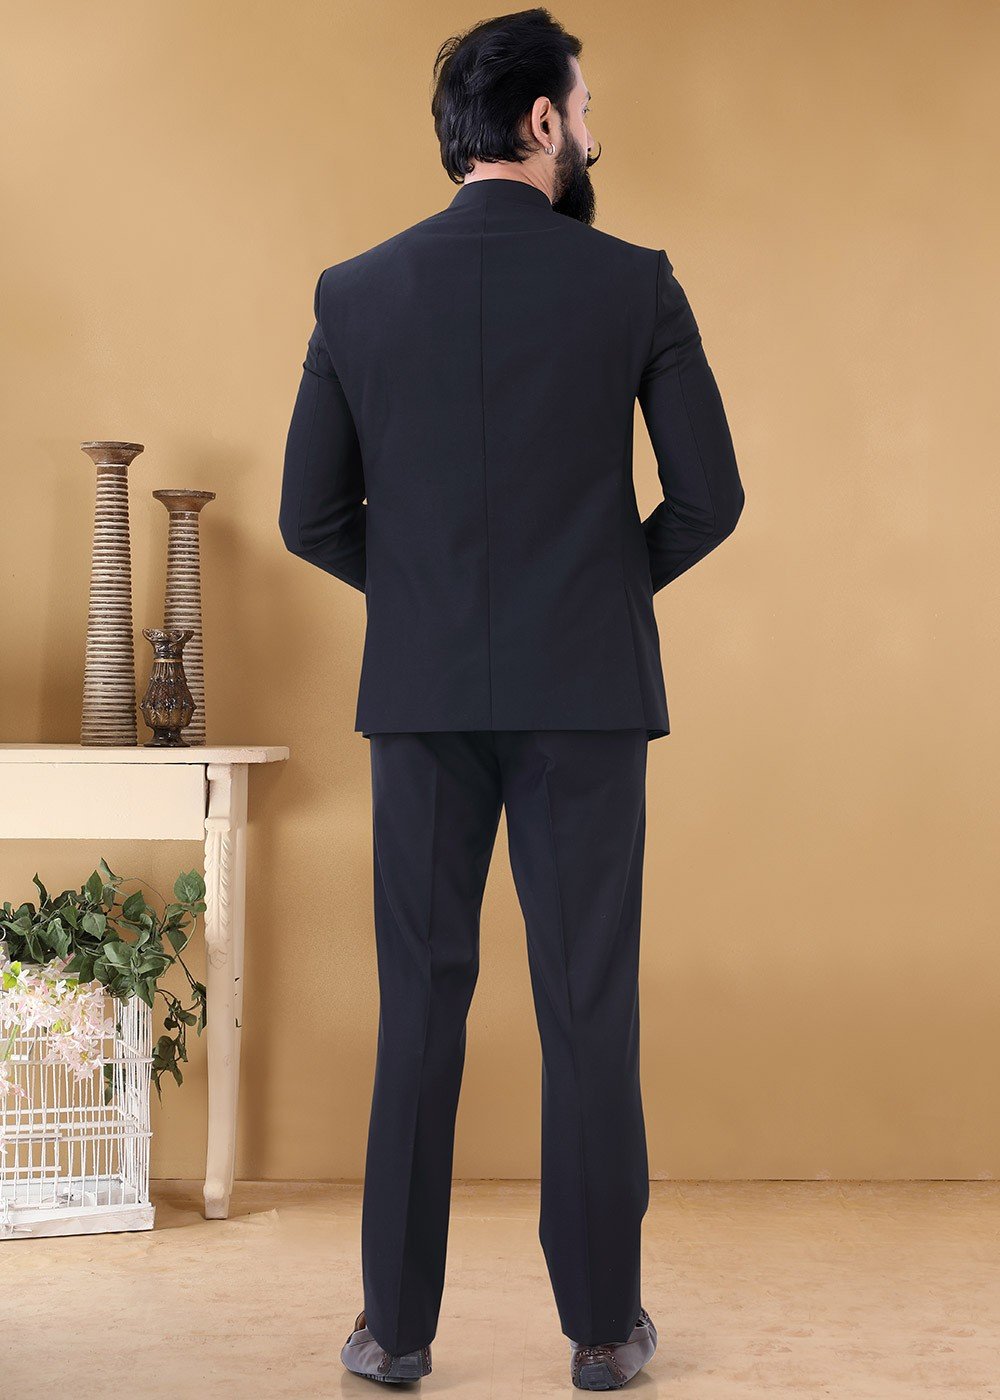 Designerdarji Indian Designer Mens Weddings Jodhpuri Indowestern Jodhpuri  Royal Suits Plus Size Available Coat/blazer - Etsy | Wedding dress men,  Dress suits for men, Wedding suits men